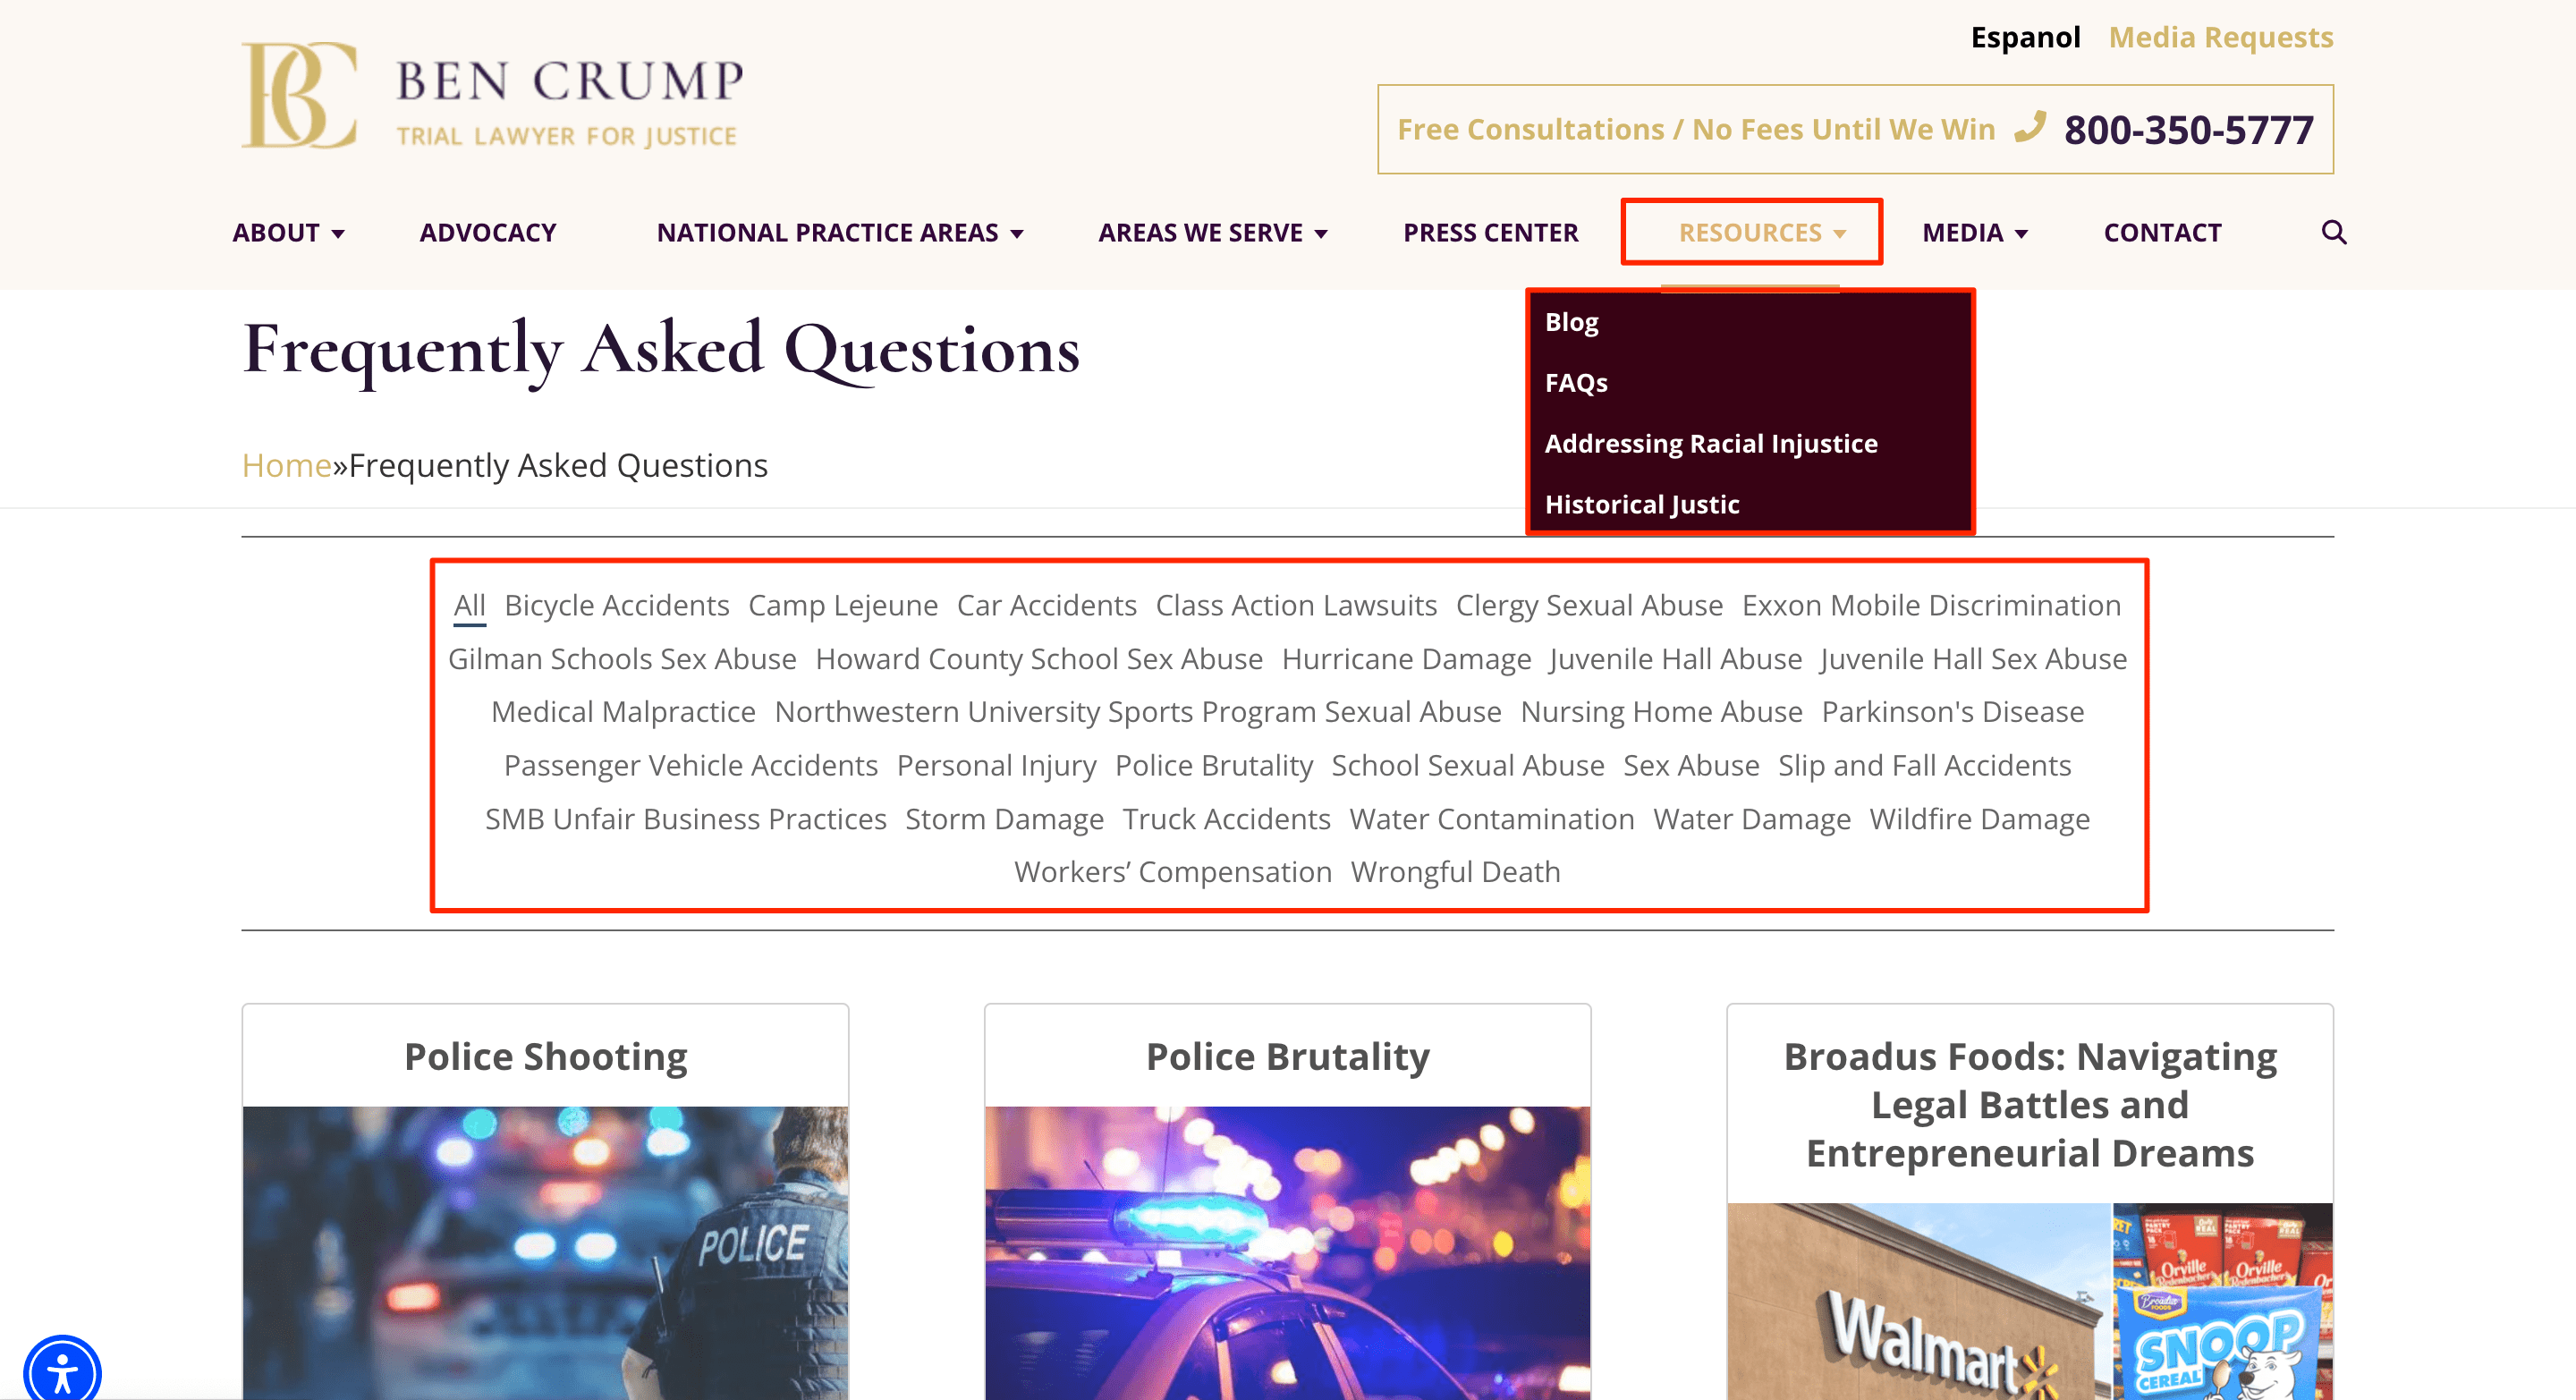 Ben Crump's FAQ section